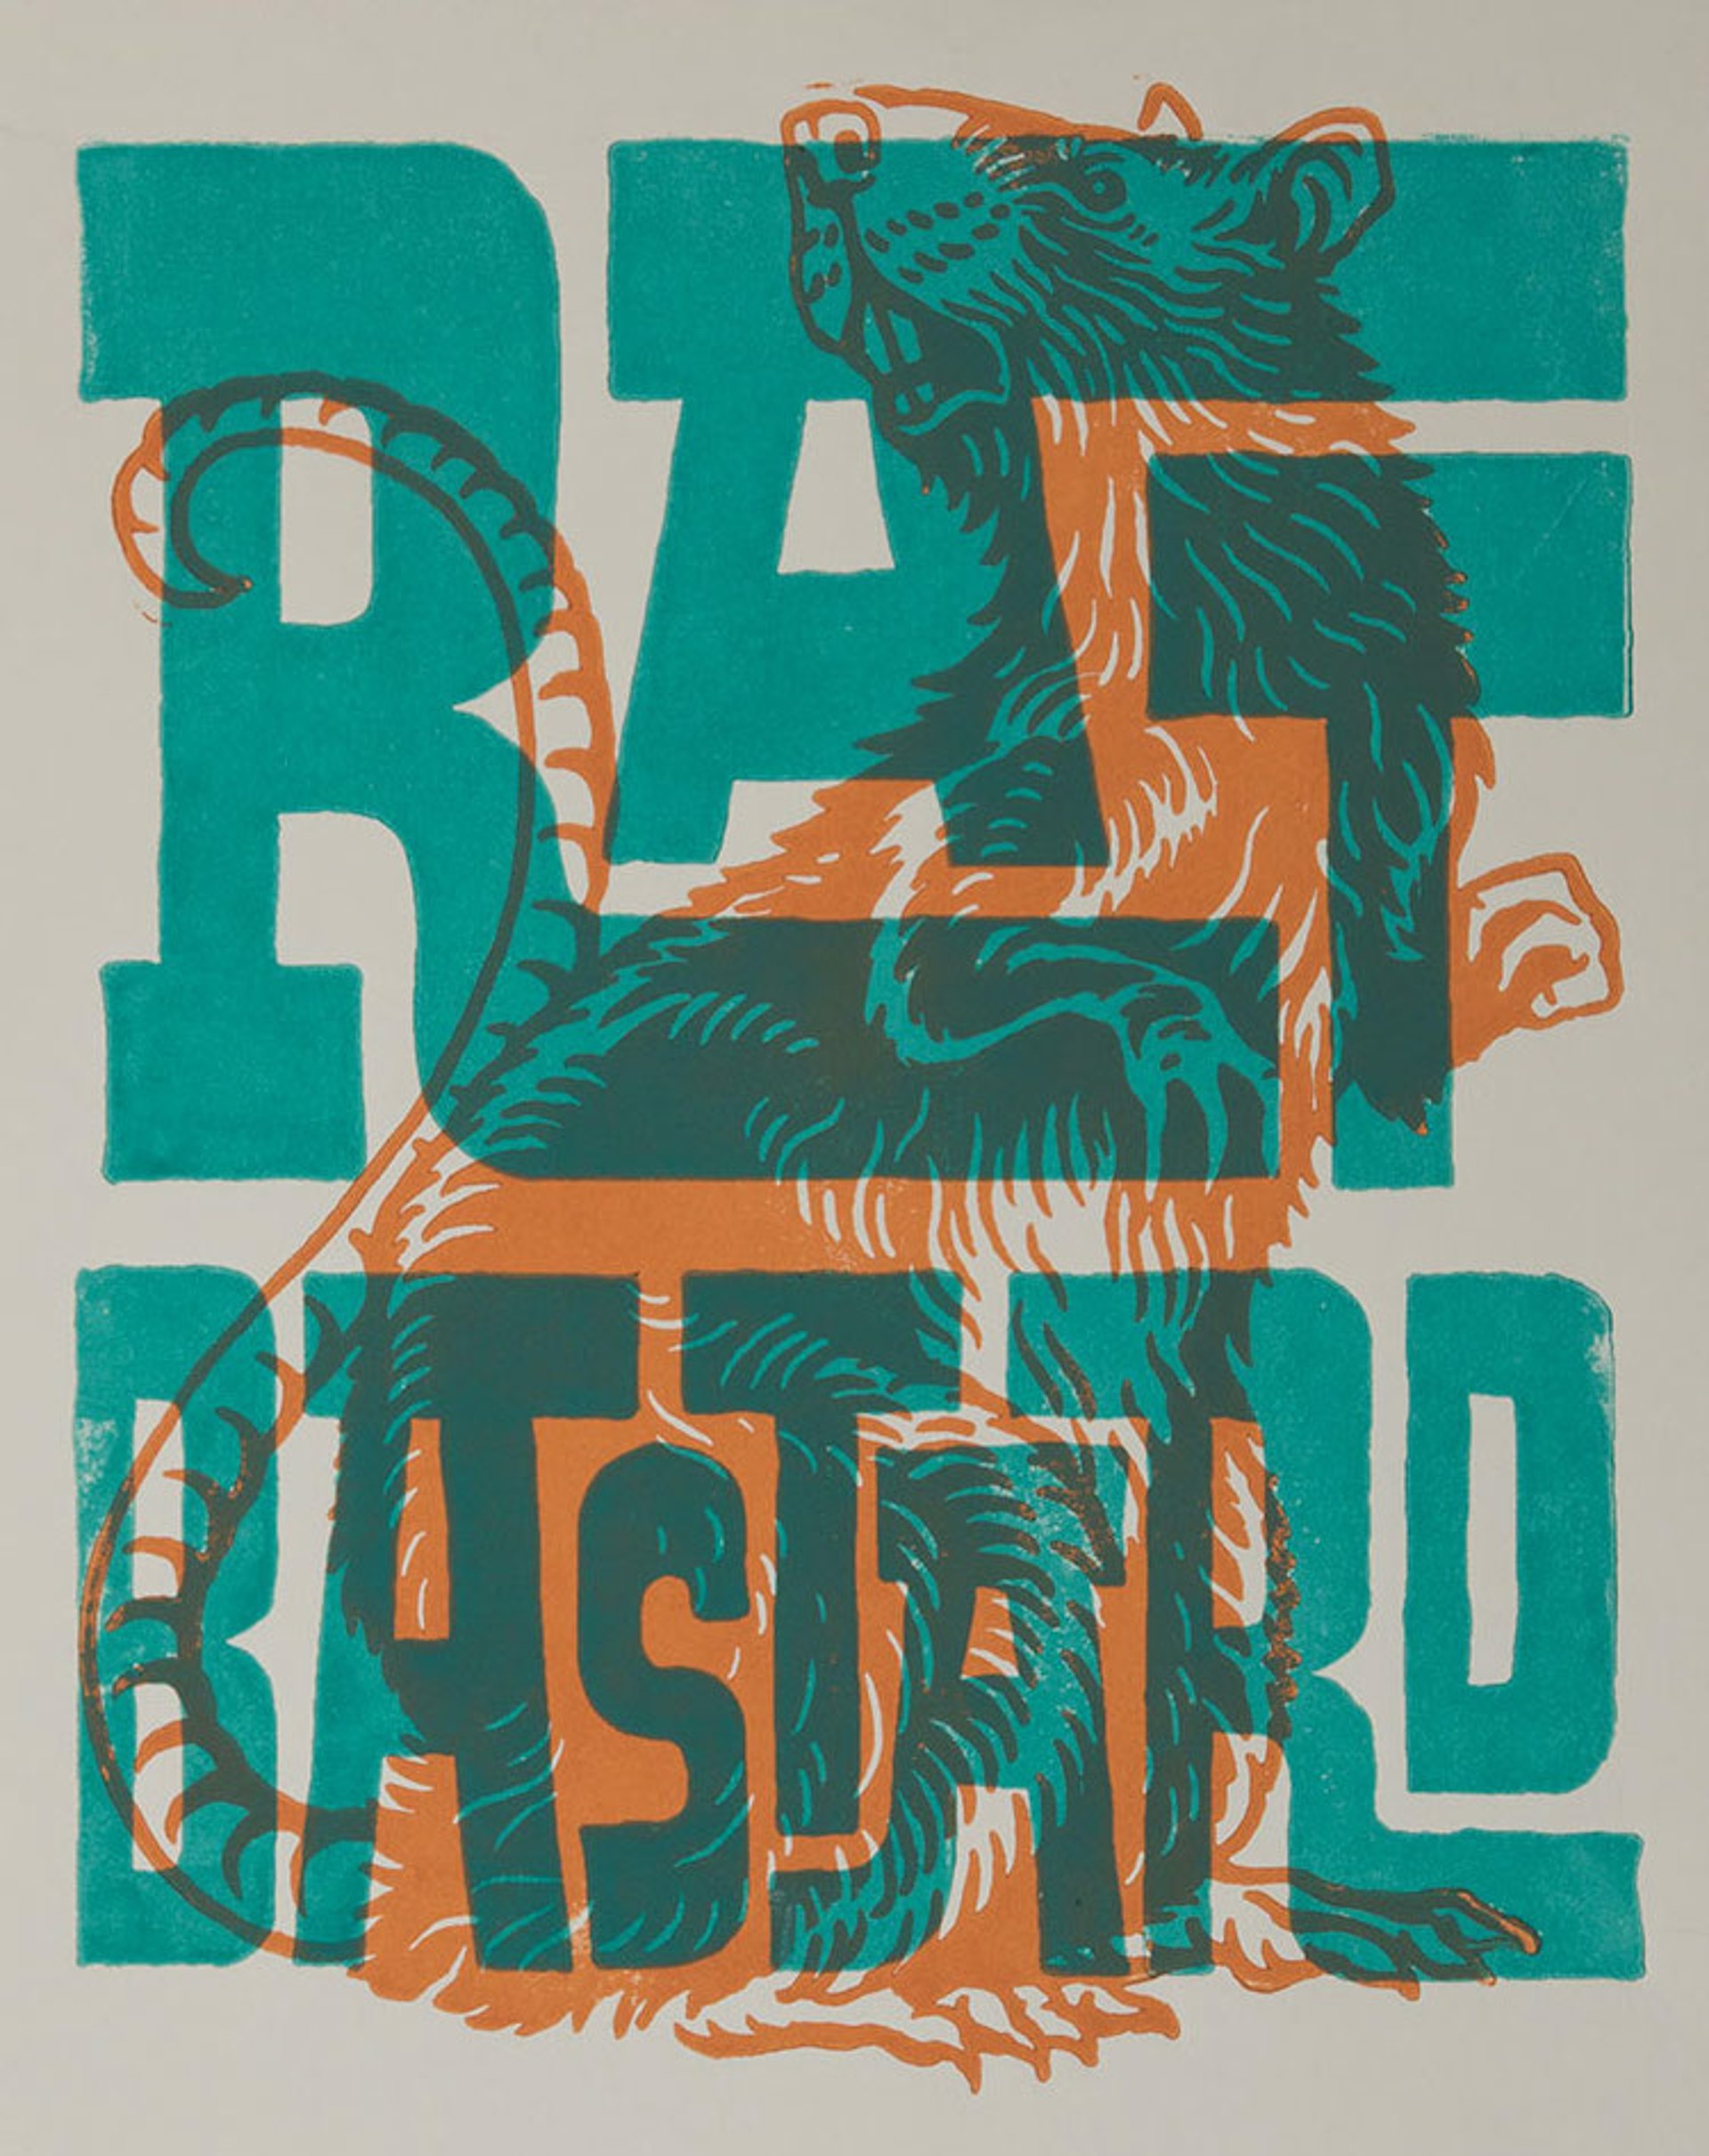 Rat Bastard by Derrick Castle